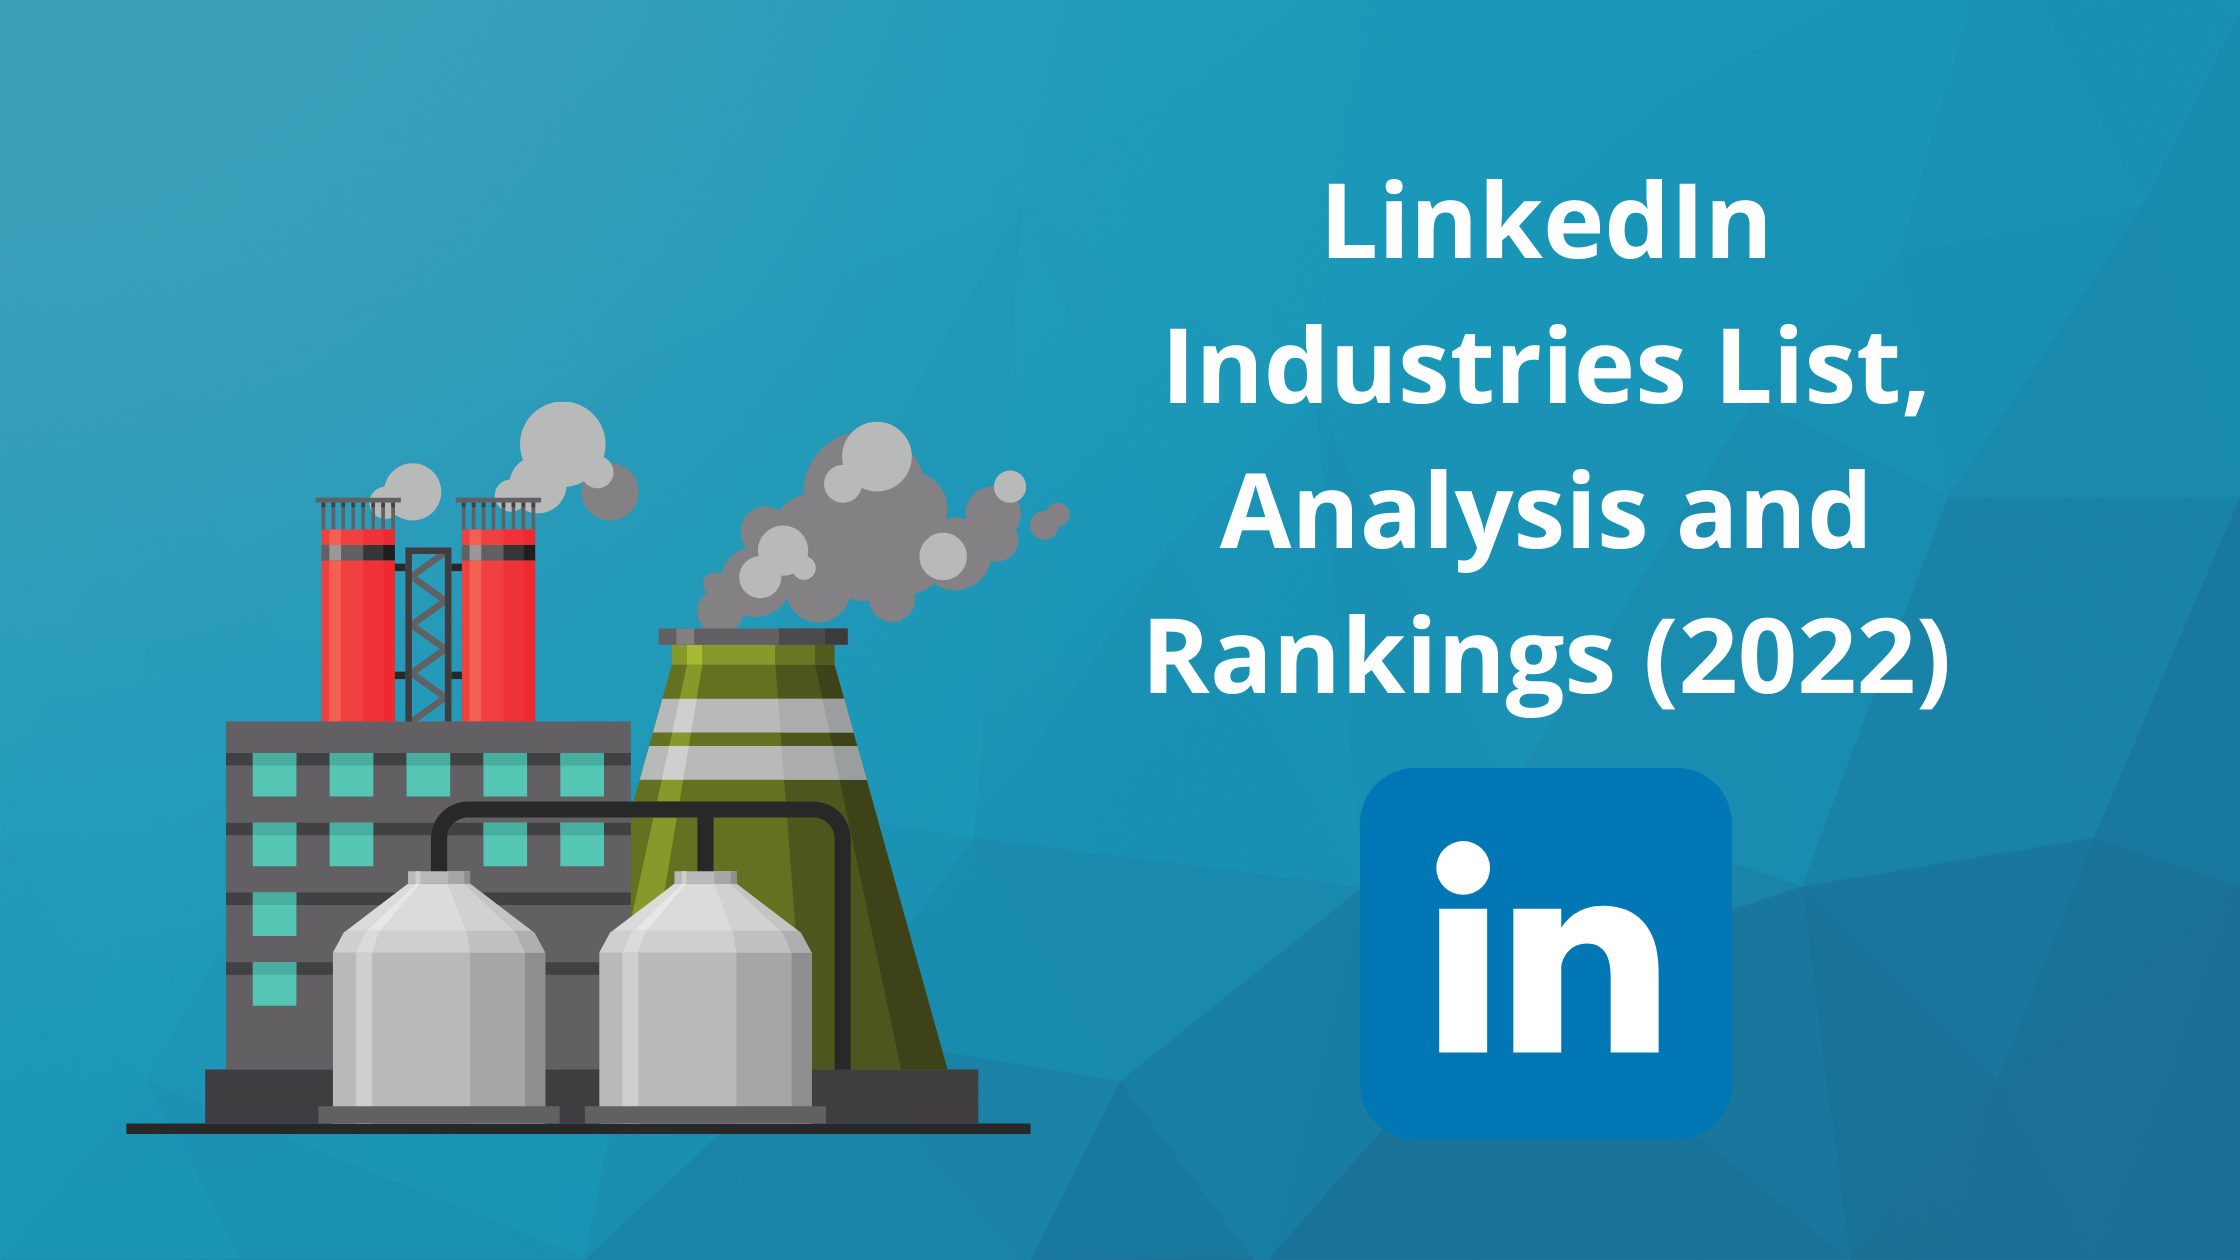 LinkedIn Industries List, Analysis and Rankings (2022)